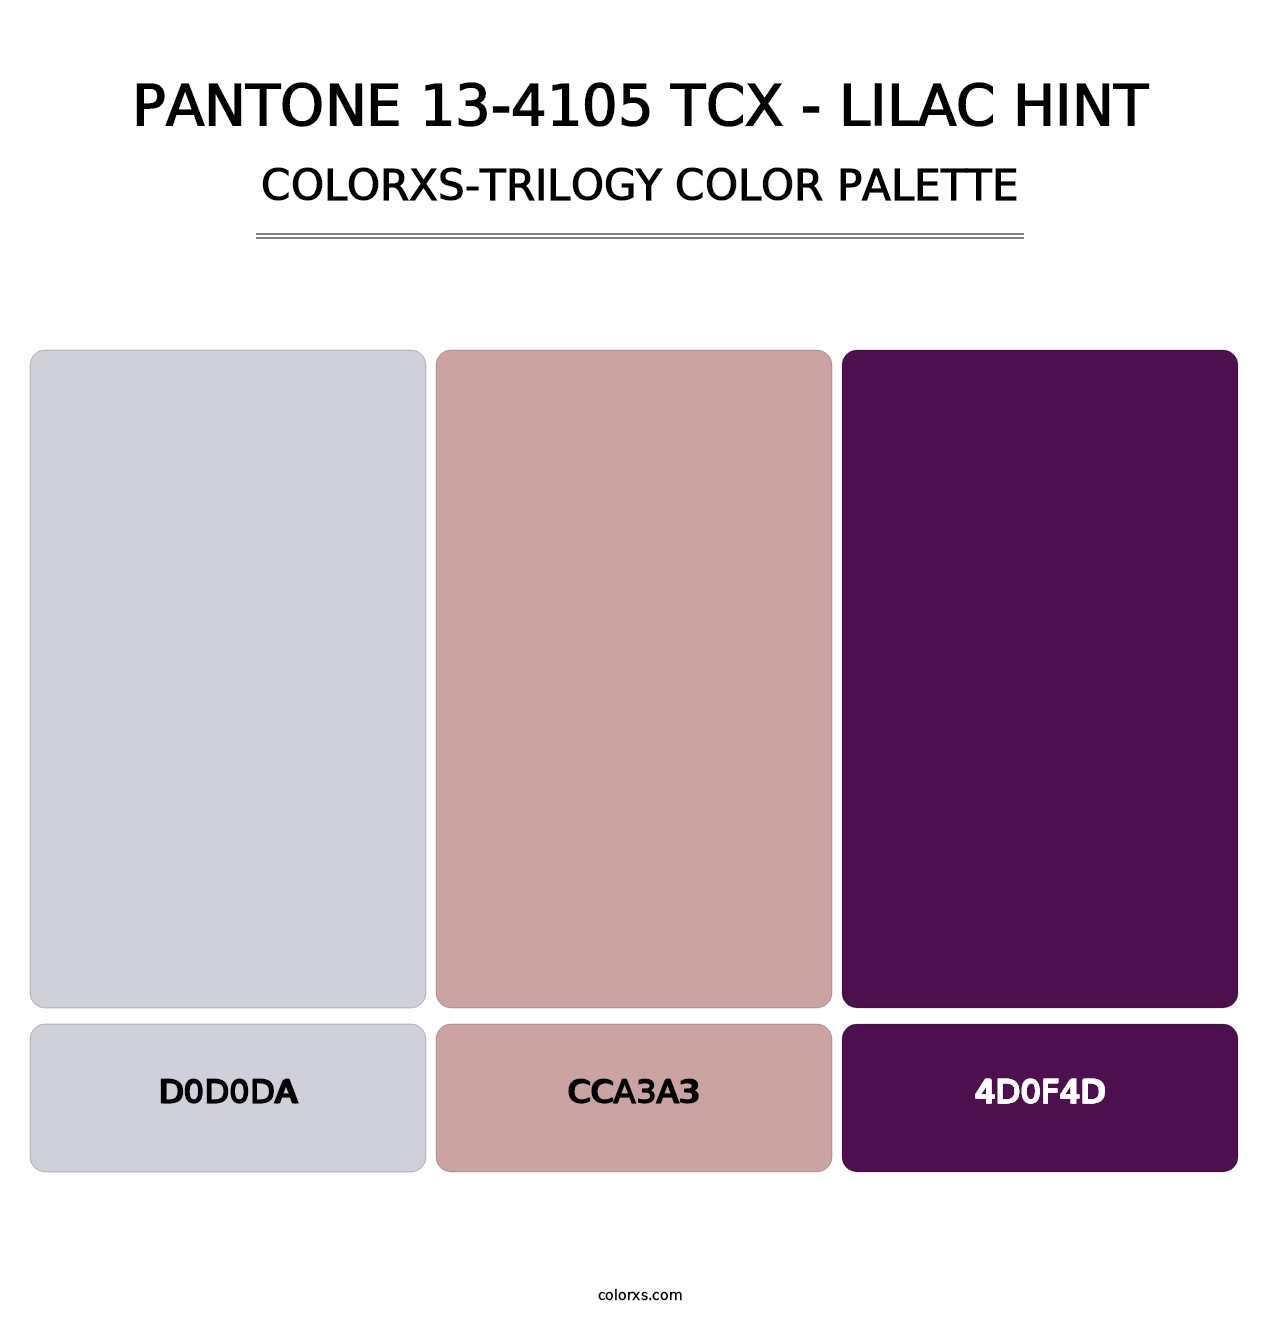 PANTONE 13-4105 TCX - Lilac Hint - Colorxs Trilogy Palette